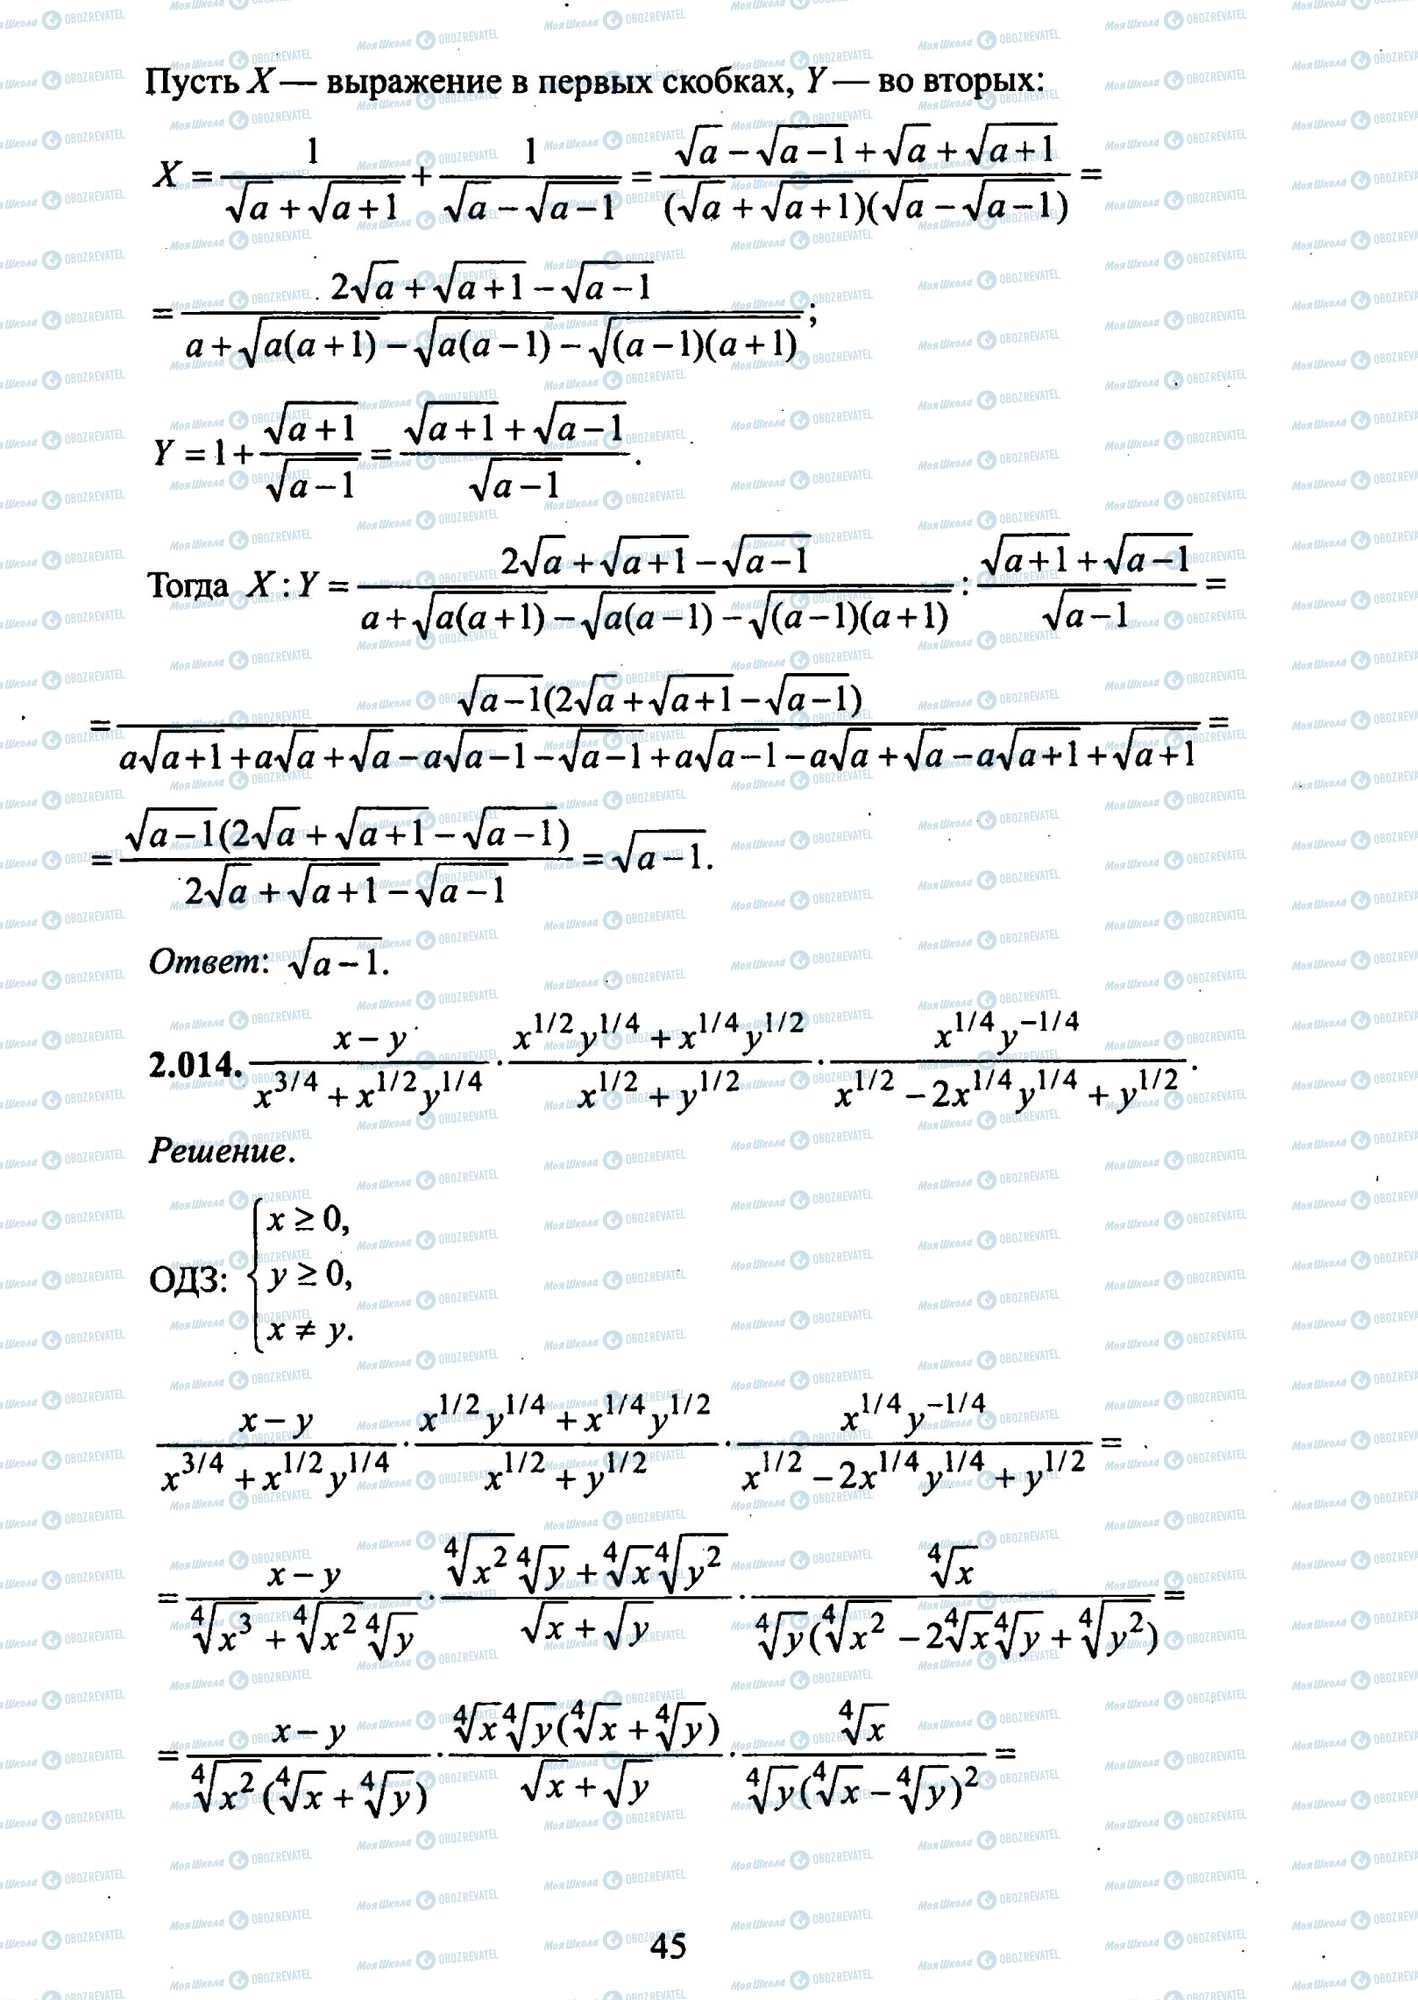 ЗНО Математика 11 класс страница 14